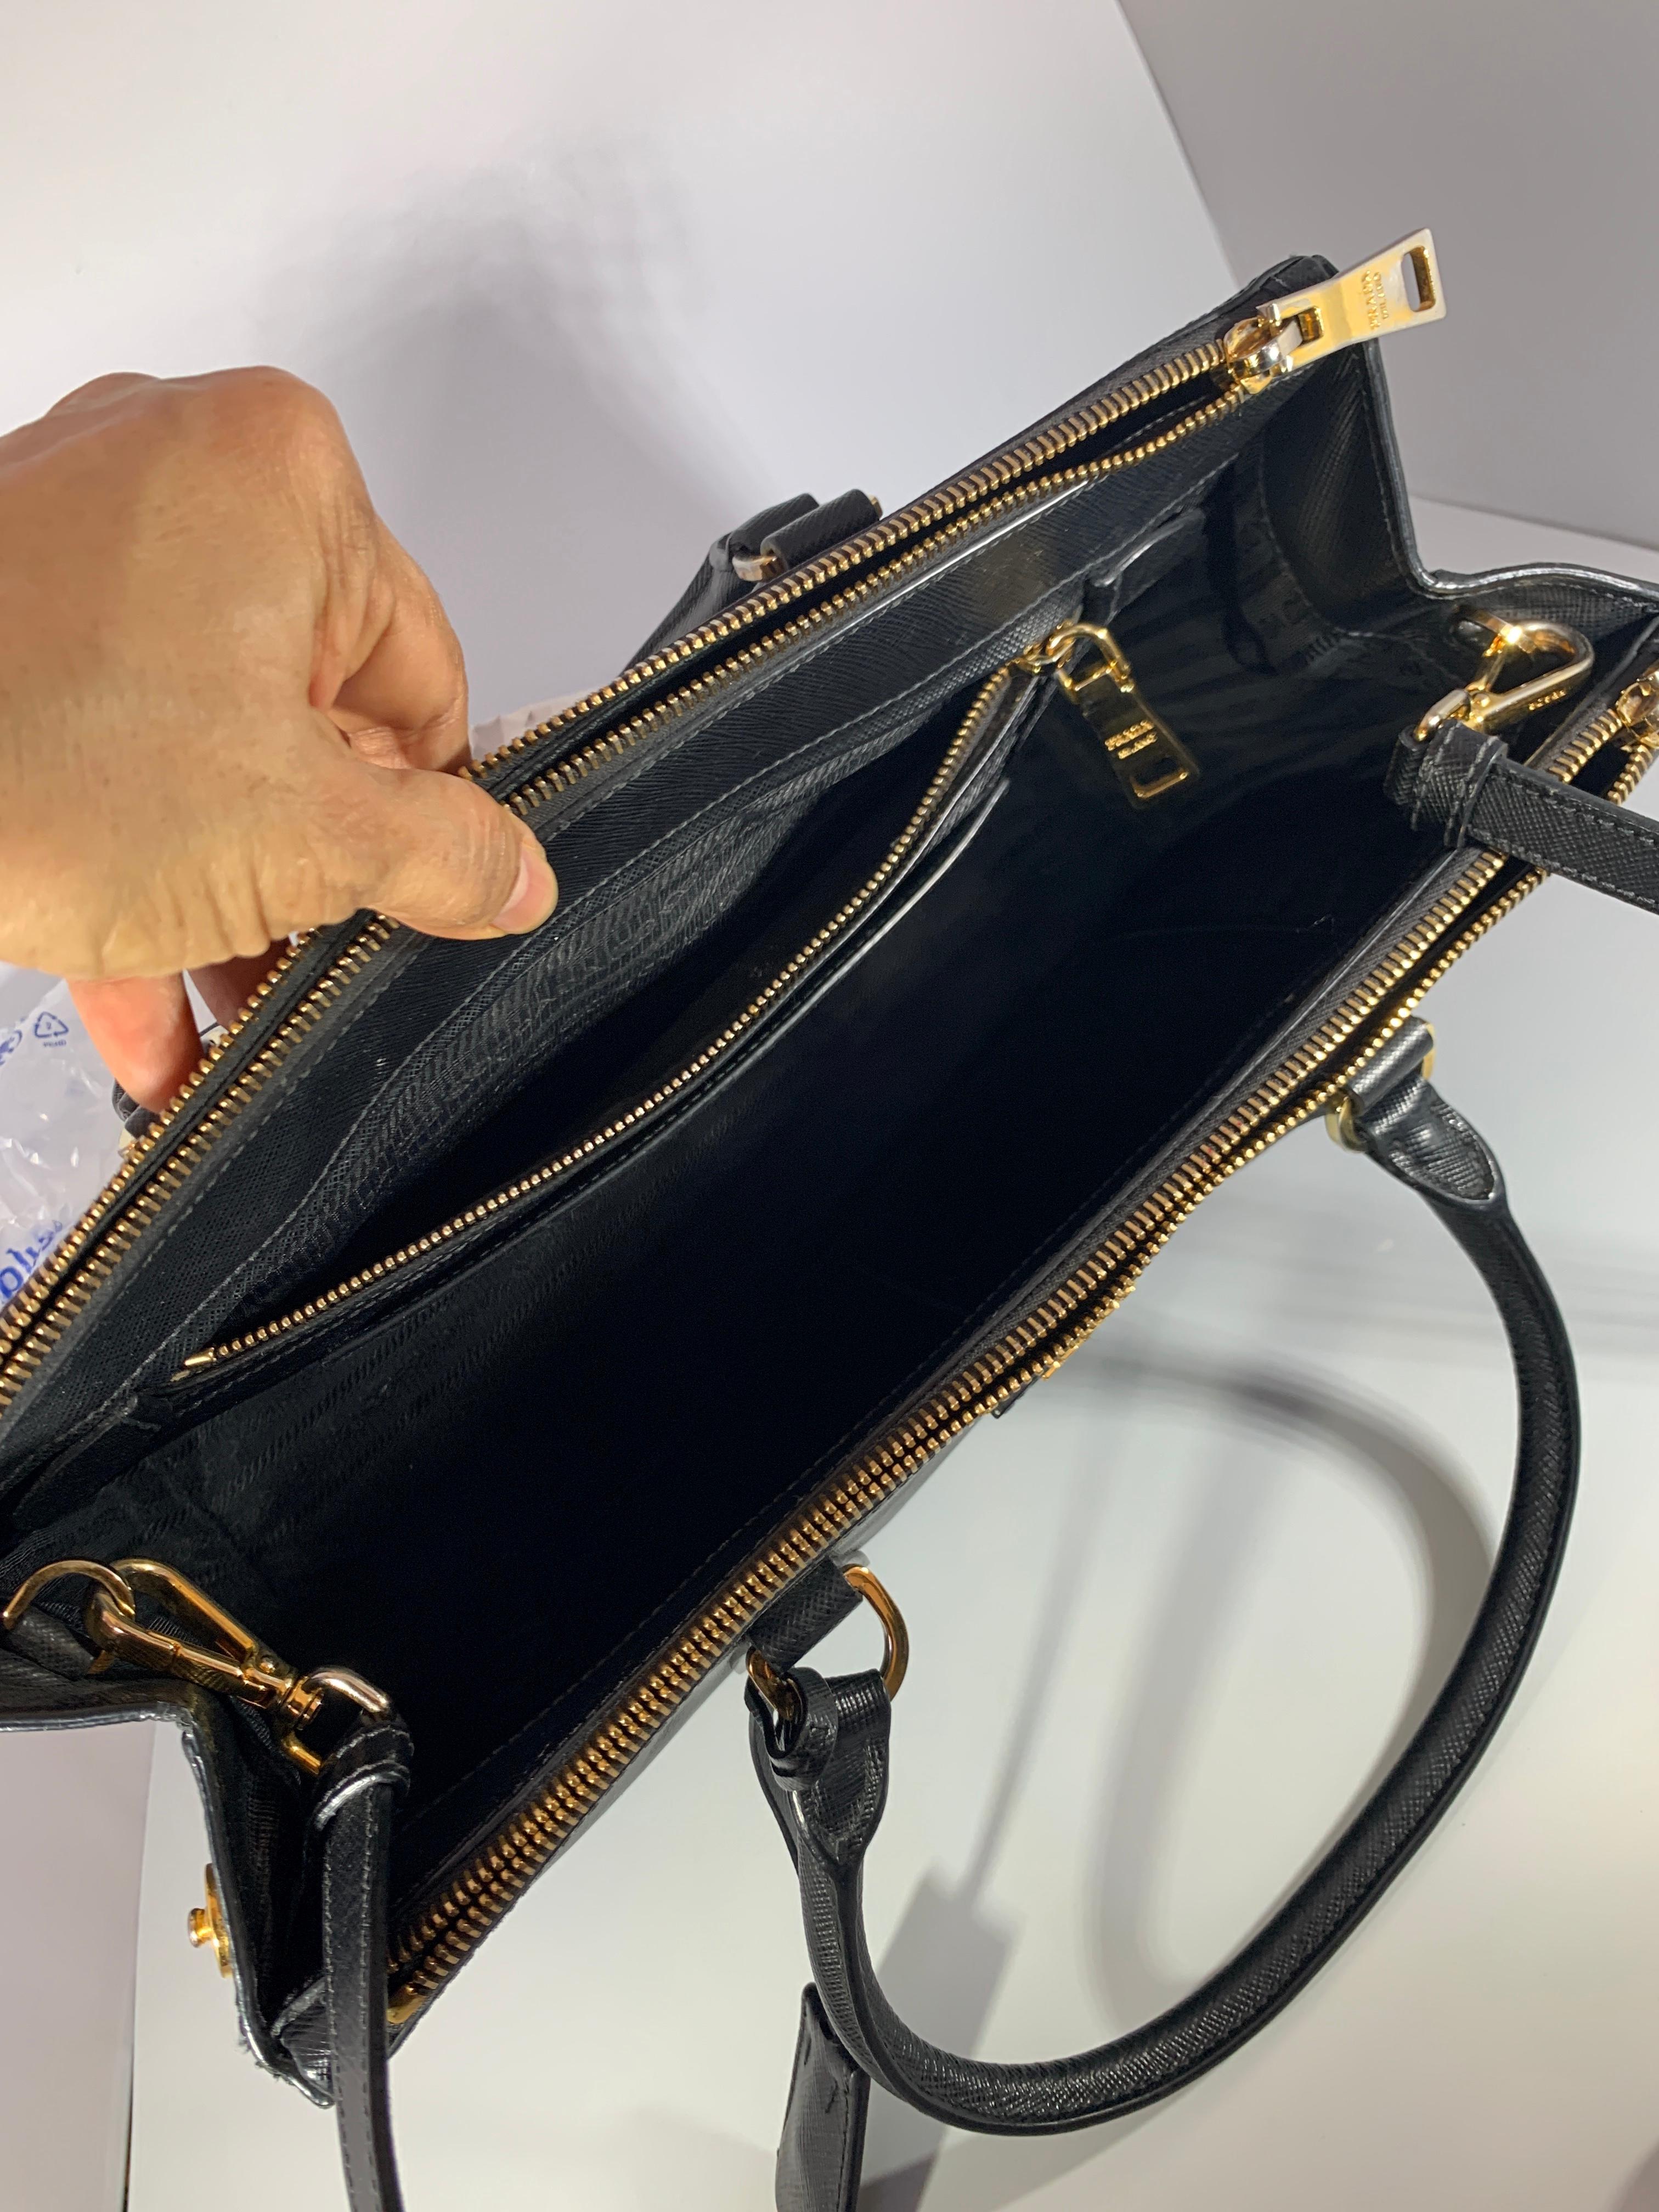 Prada Saffiano Medium Executive Tote Bag, Black (Nero), Double Zip Tote Bag  In Excellent Condition For Sale In New York, NY